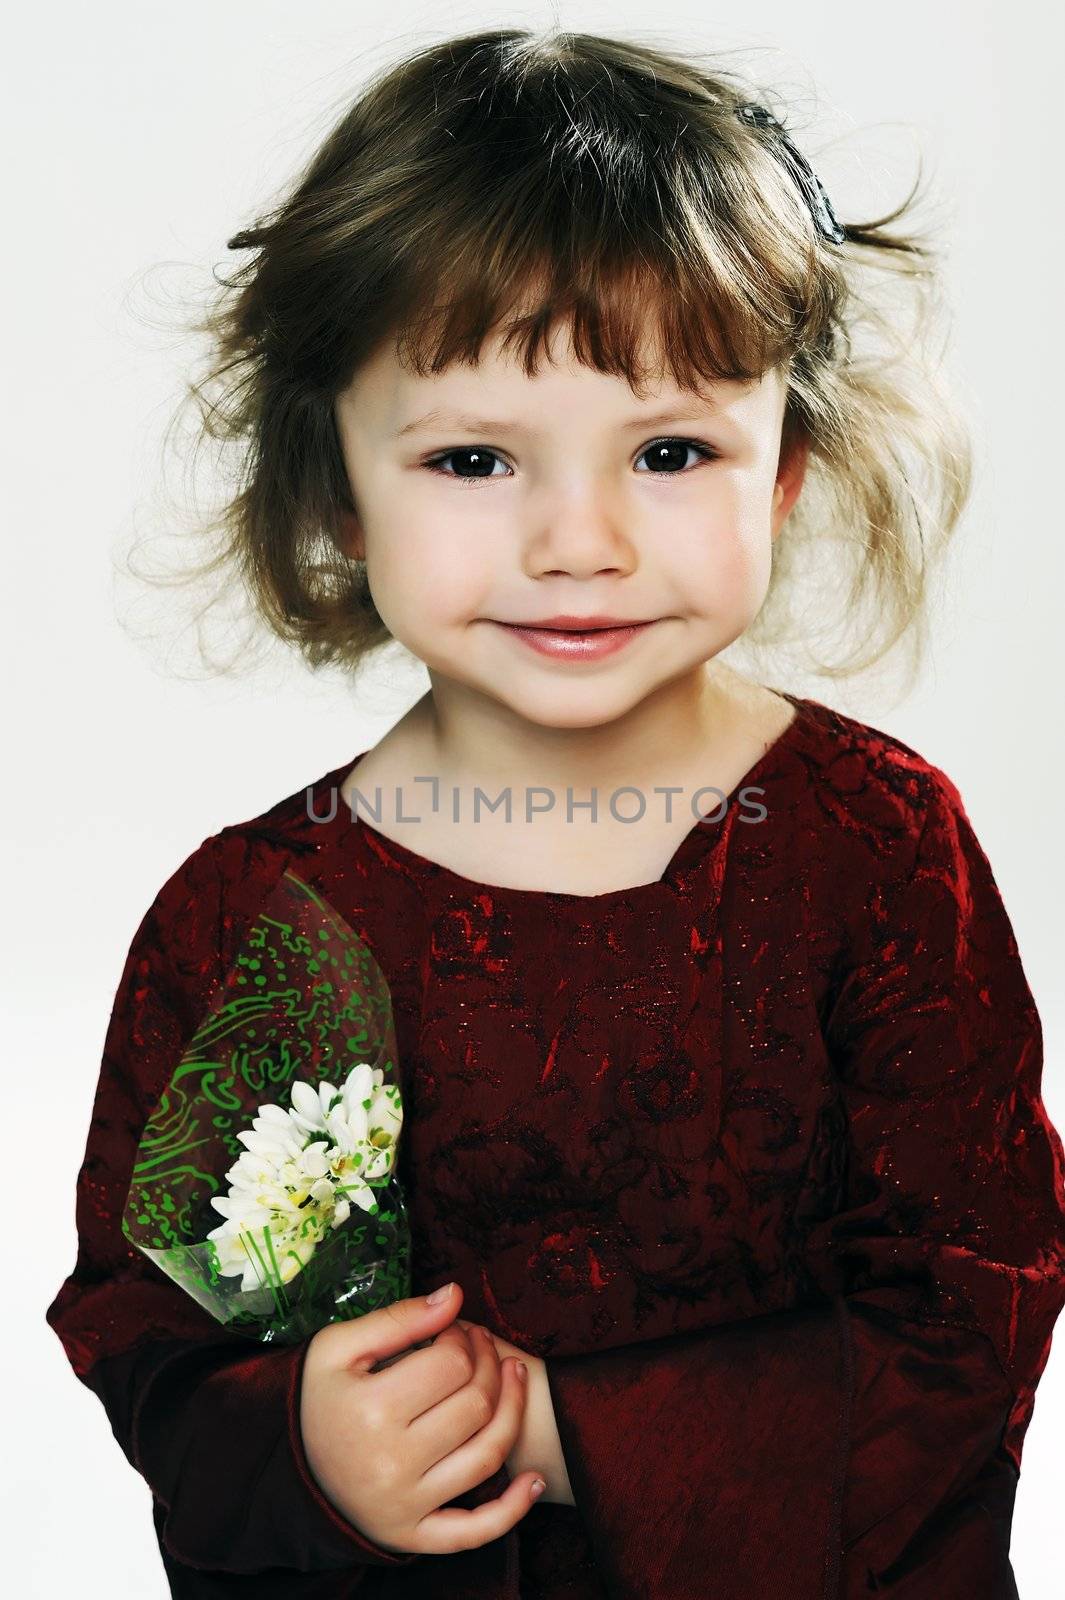 Little girl with flowers by velkol